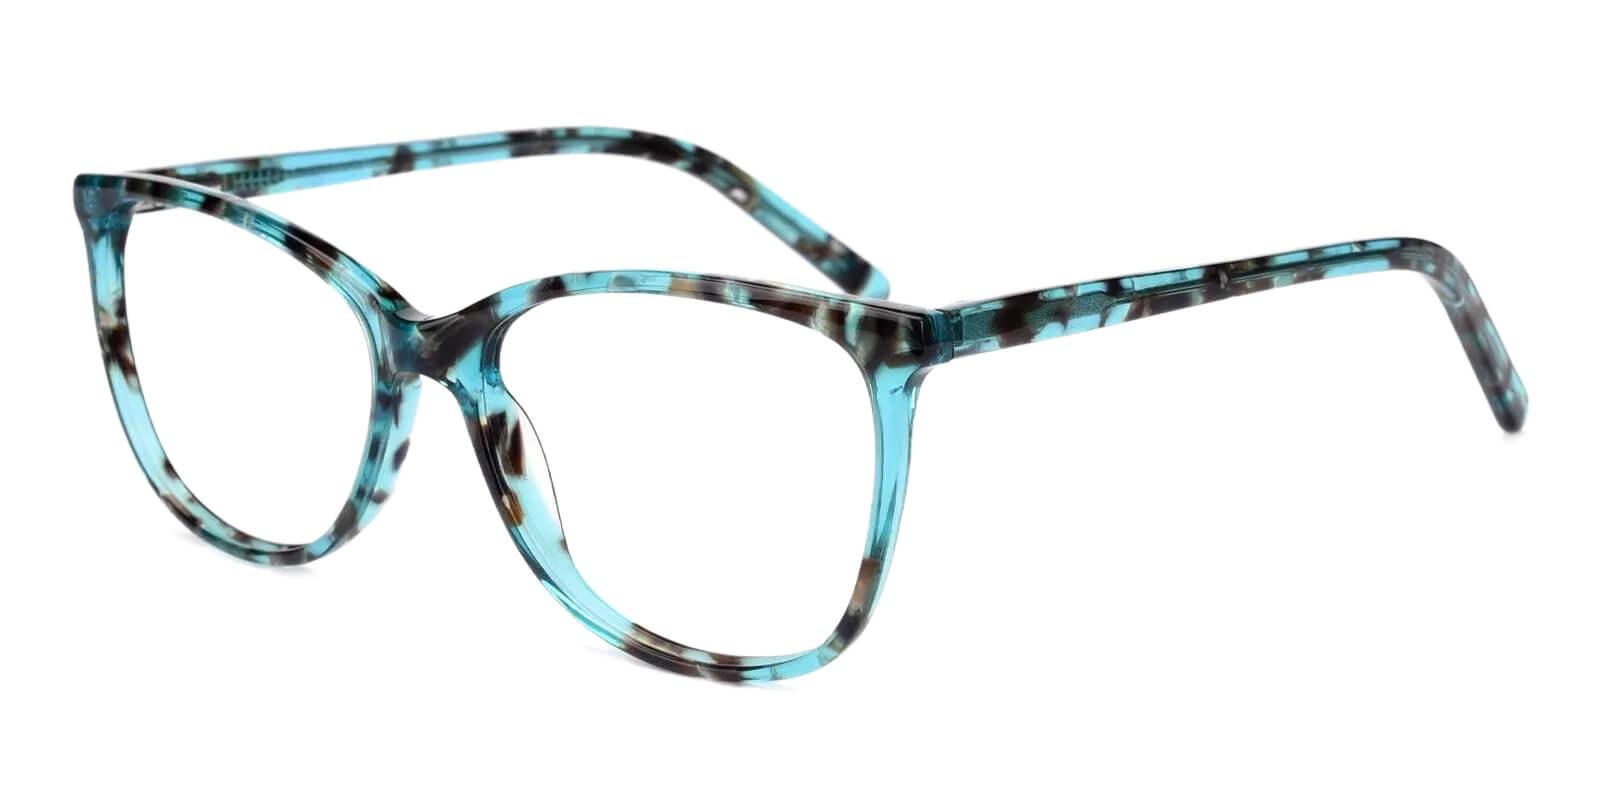 Viola Green Acetate Eyeglasses , Fashion , SpringHinges , UniversalBridgeFit Frames from ABBE Glasses